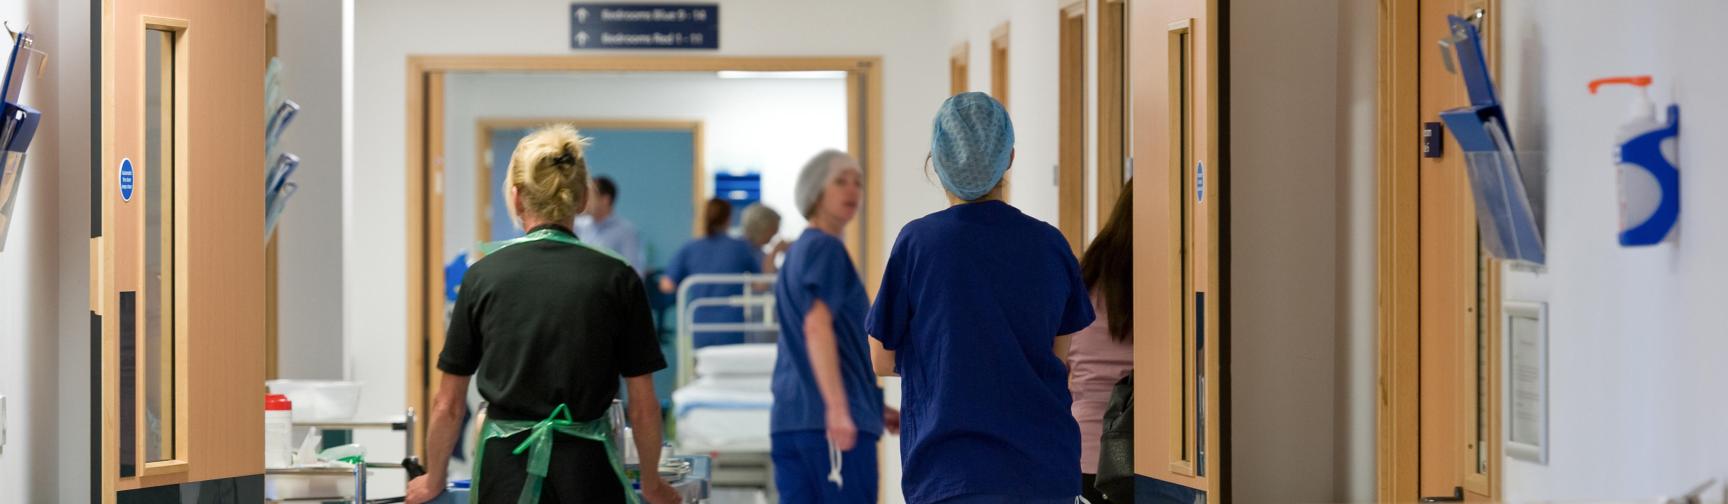 Staff walking down an NHS hospital corridor.